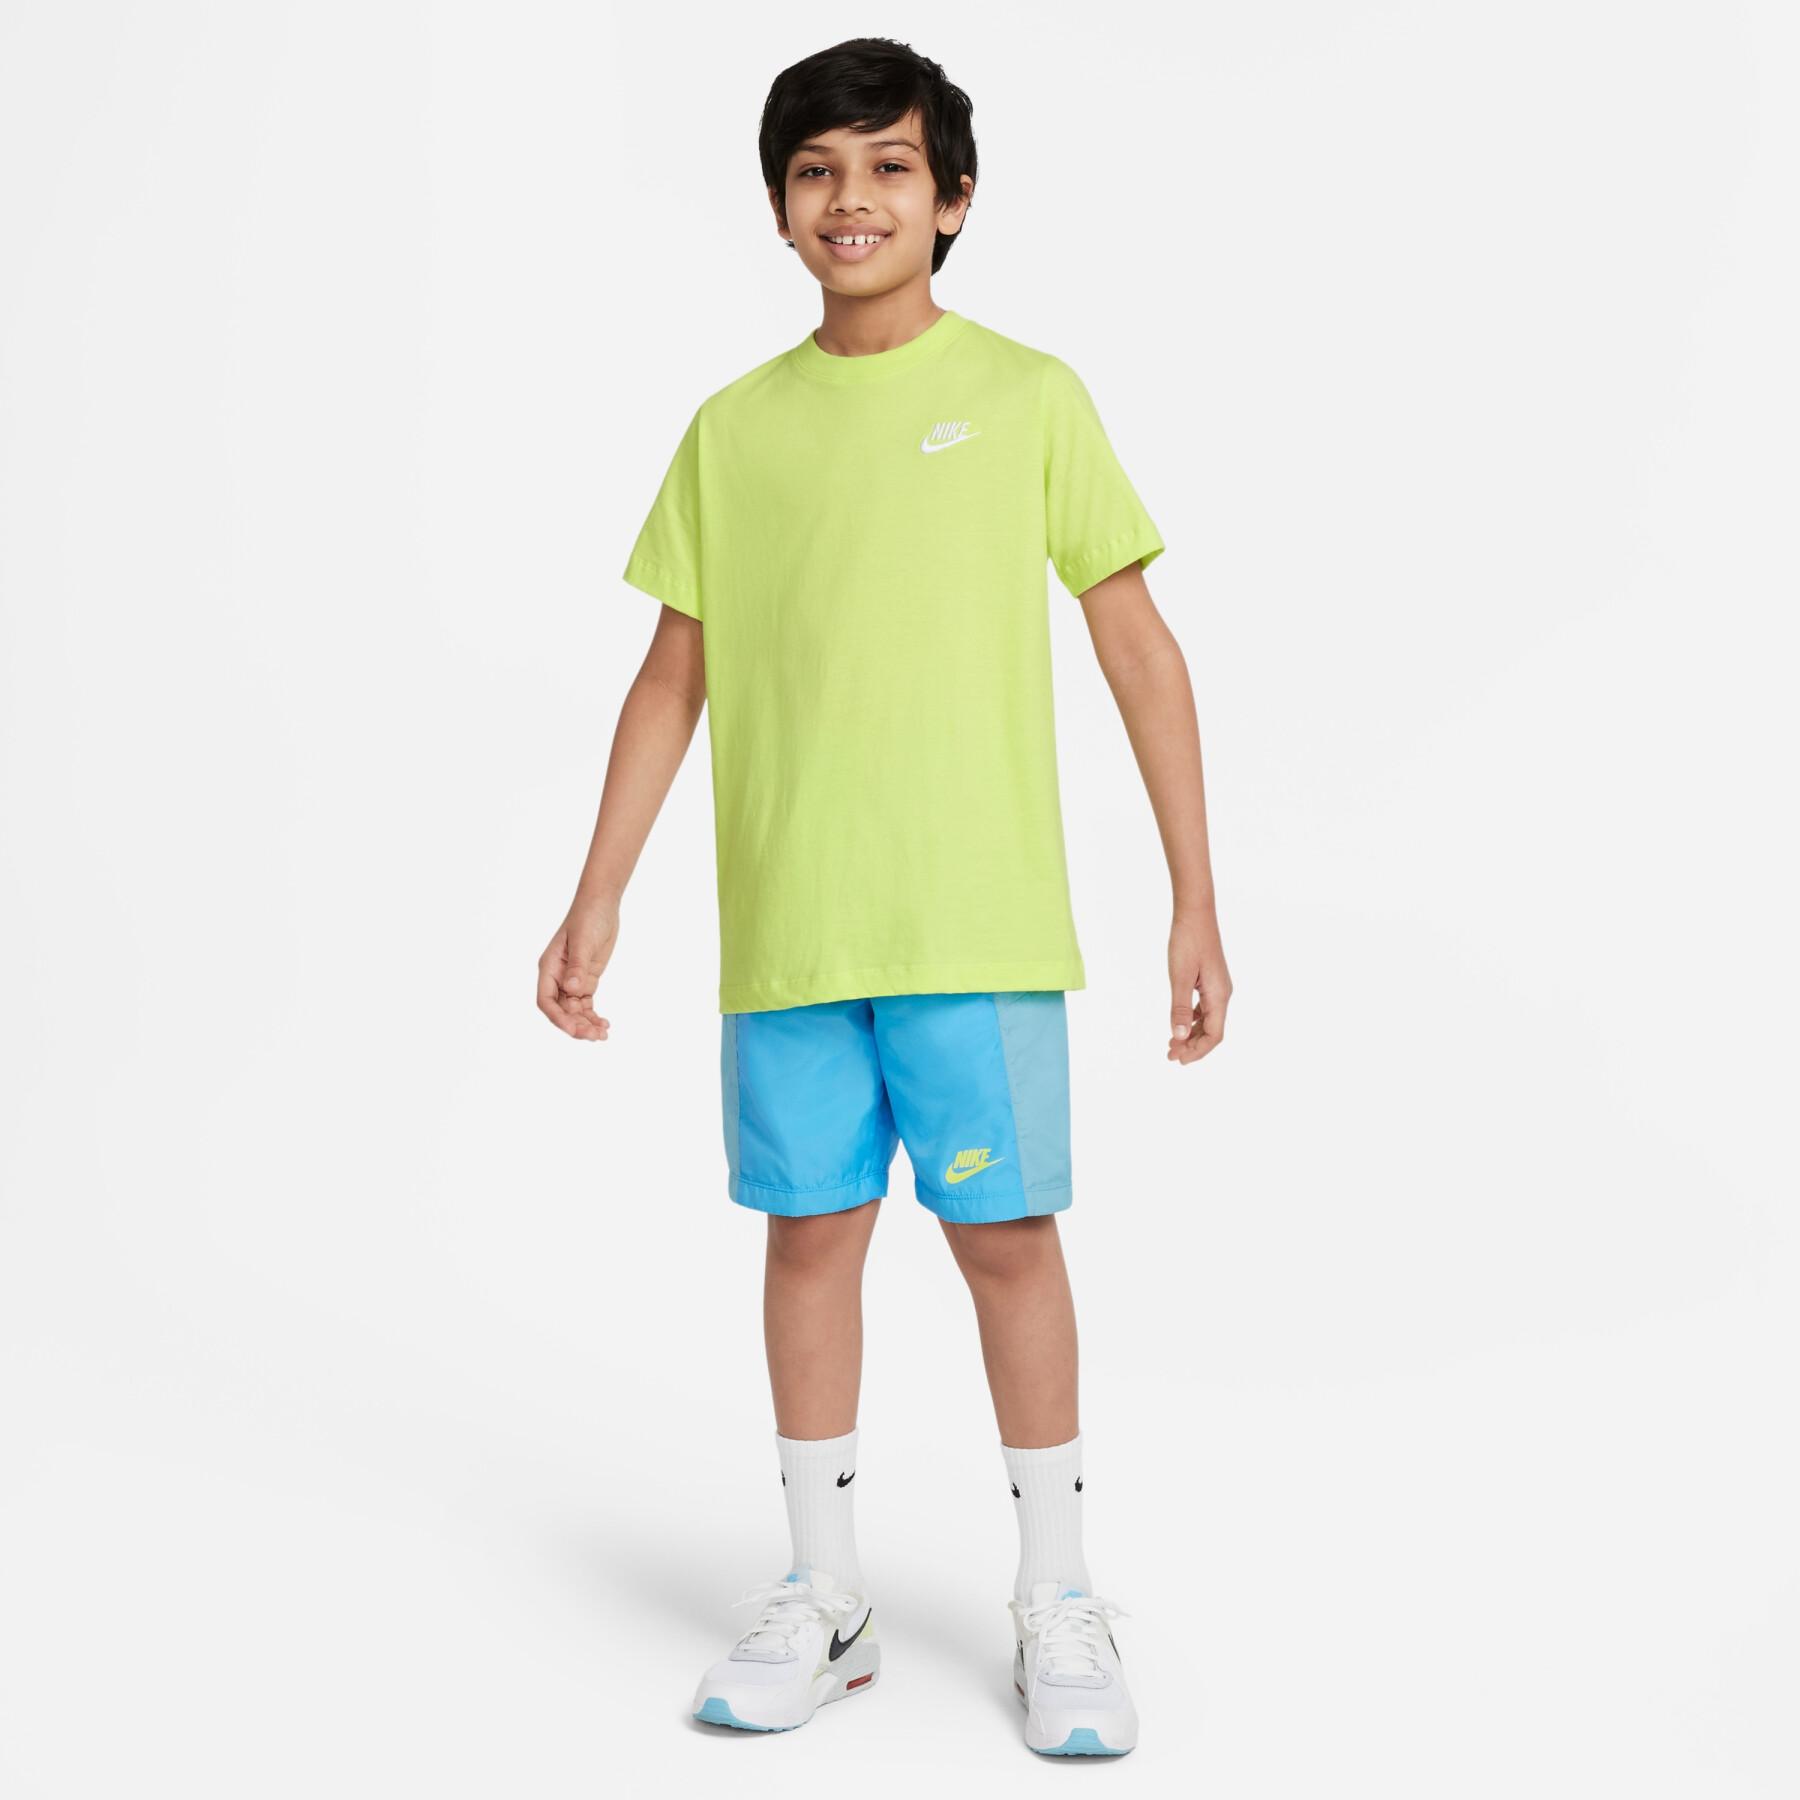 Shorts für Kinder Nike Amplify